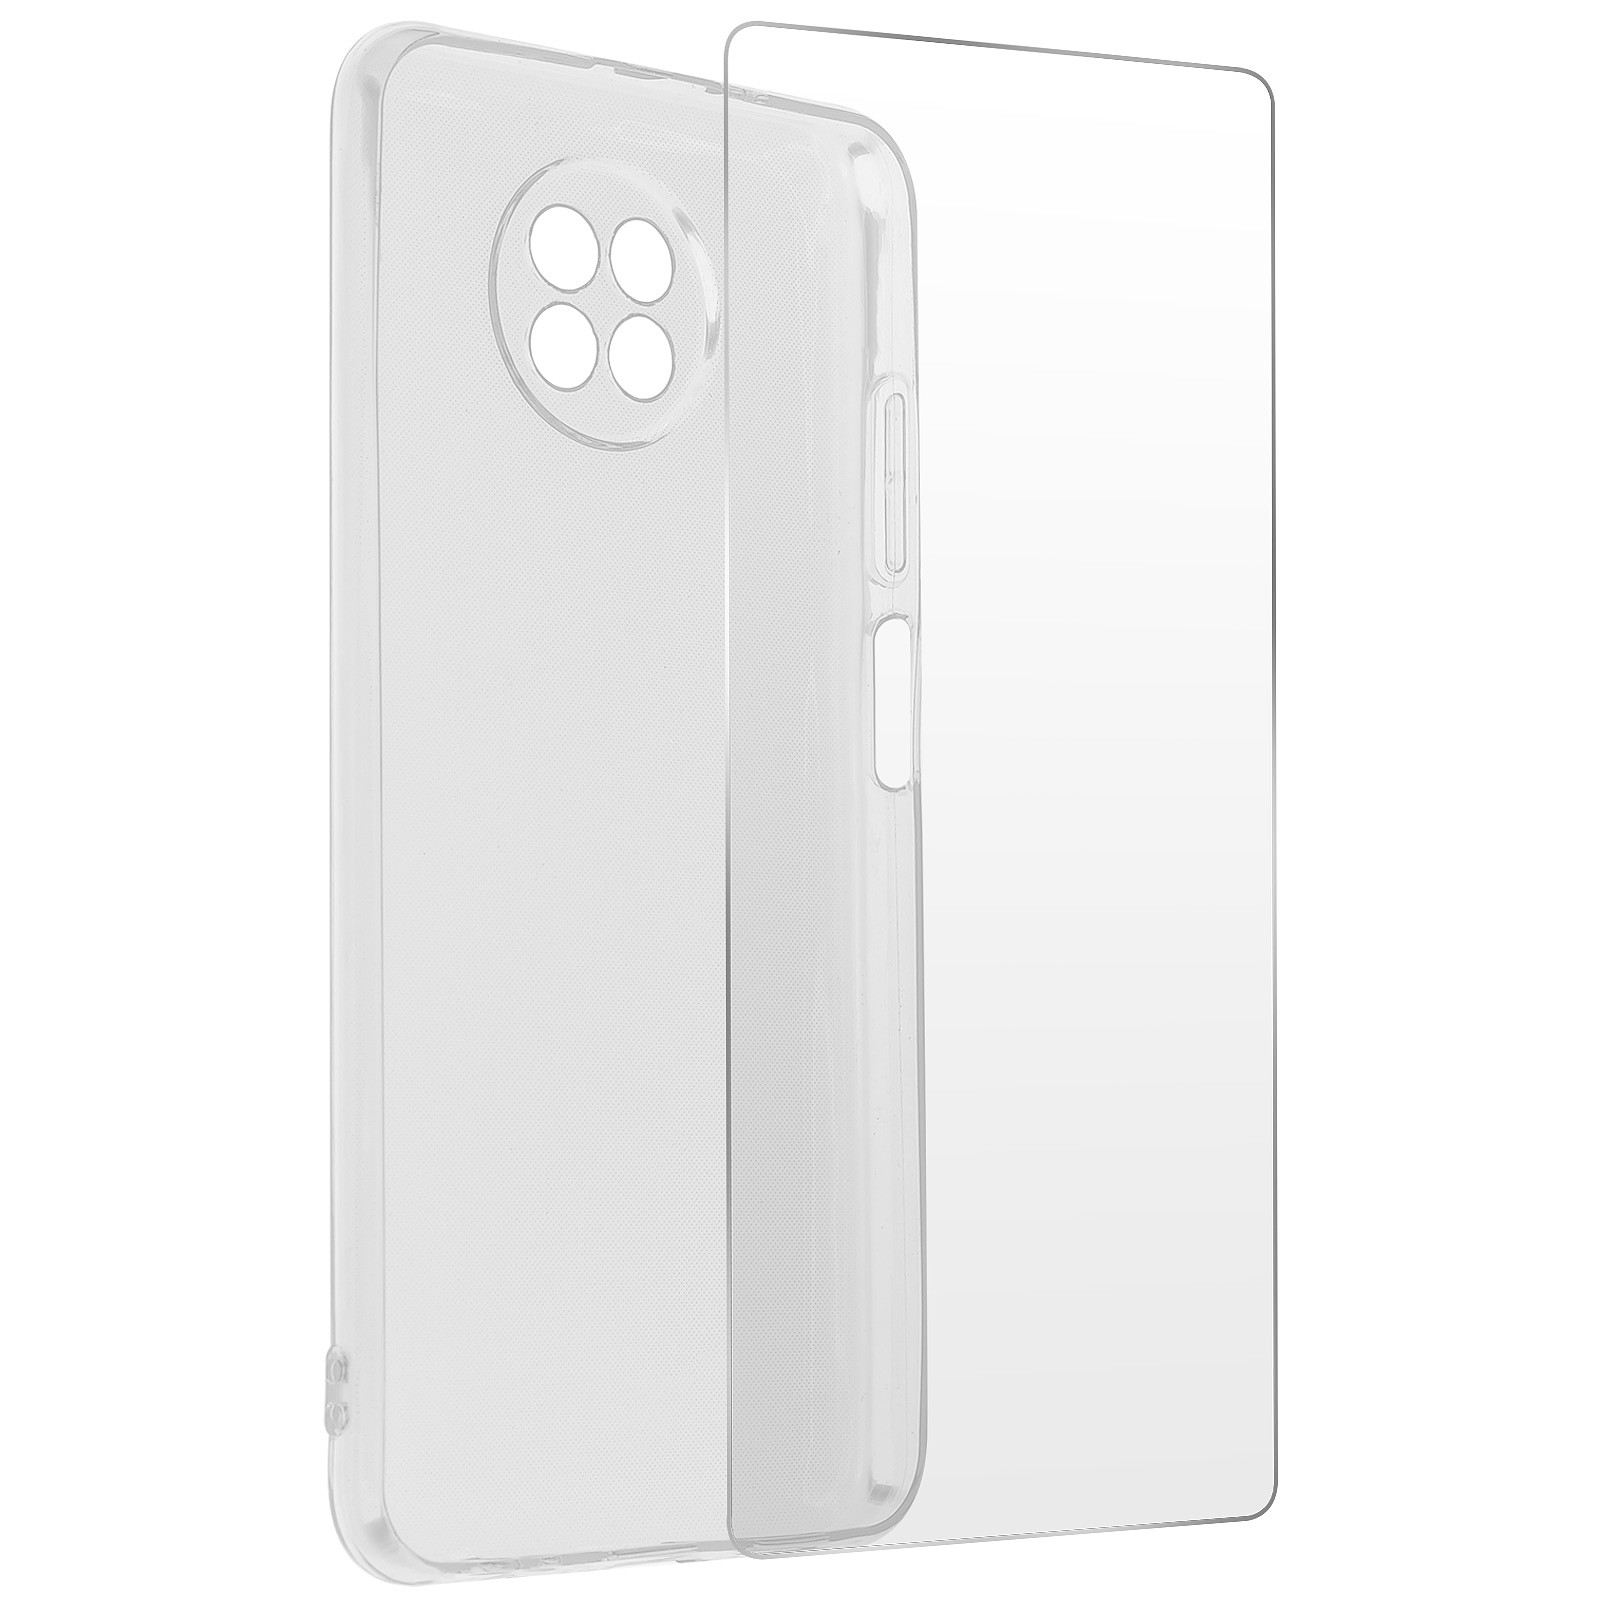 Avizar Coque pour Xiaomi Redmi Note 9T 5G Souple et Film Verre Trempe Durete 9H Transparent - Coque telephone Avizar